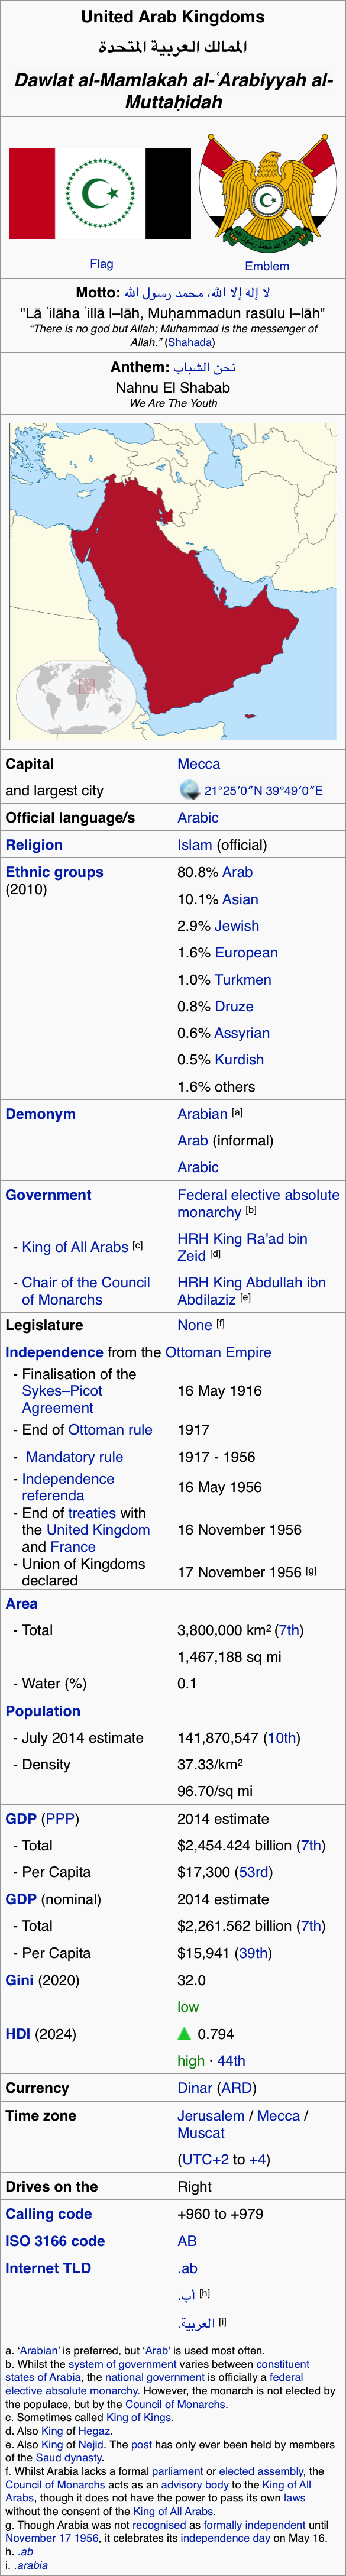 United Arab Kingdoms Info-box by HouseOfHesse on DeviantArt